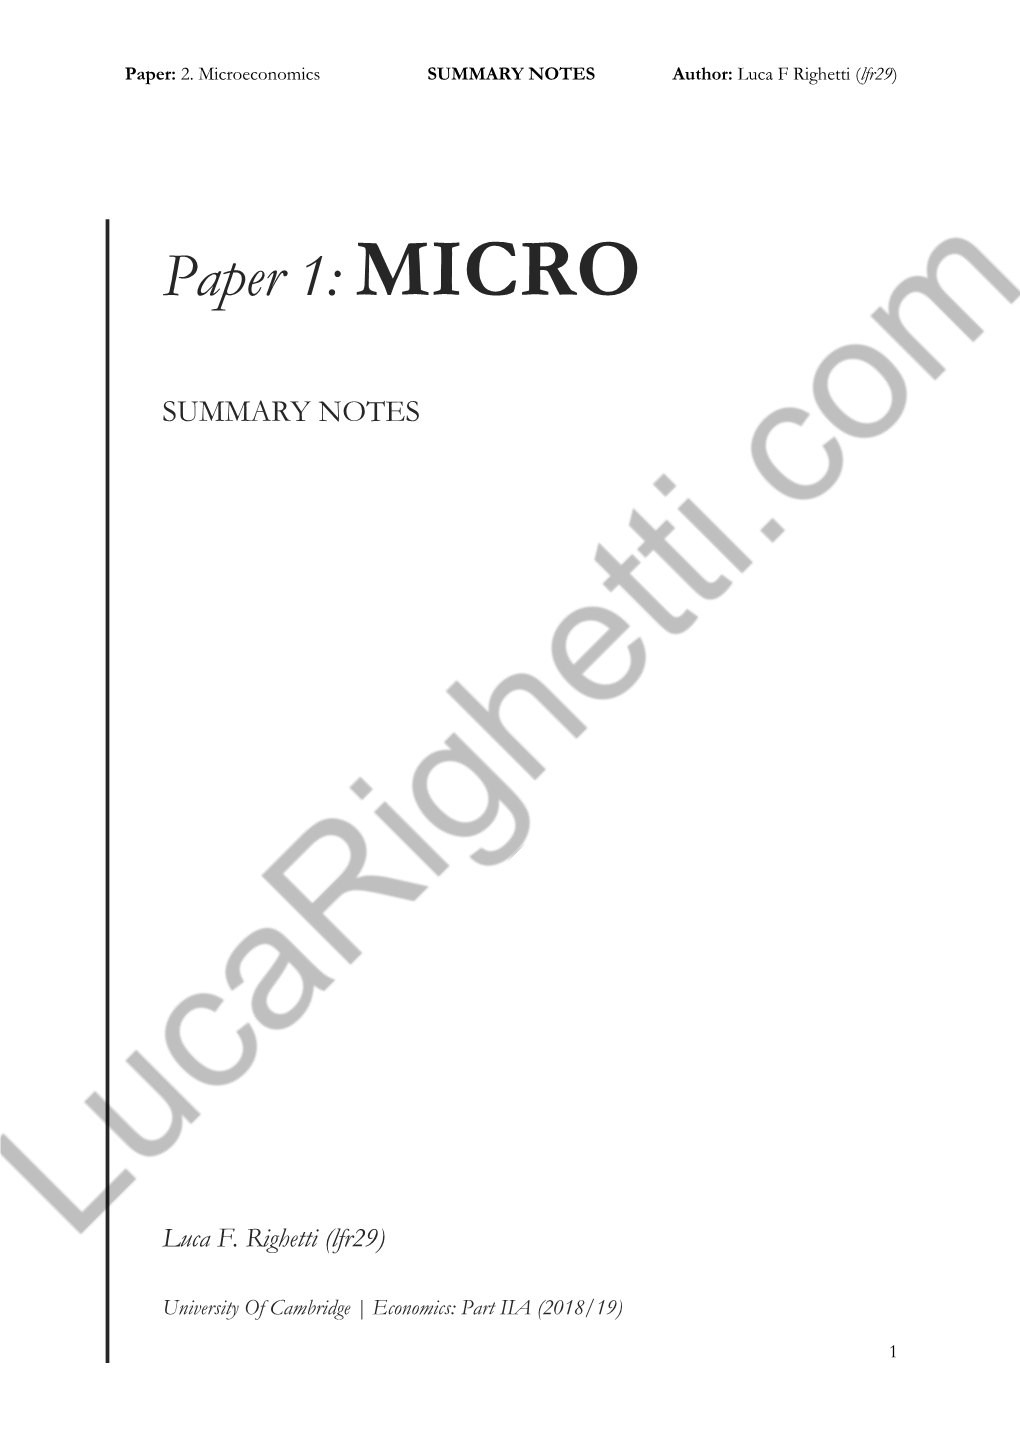 Microeconomics SUMMARY NOTES Author: Luca F Righetti (Lfr29)